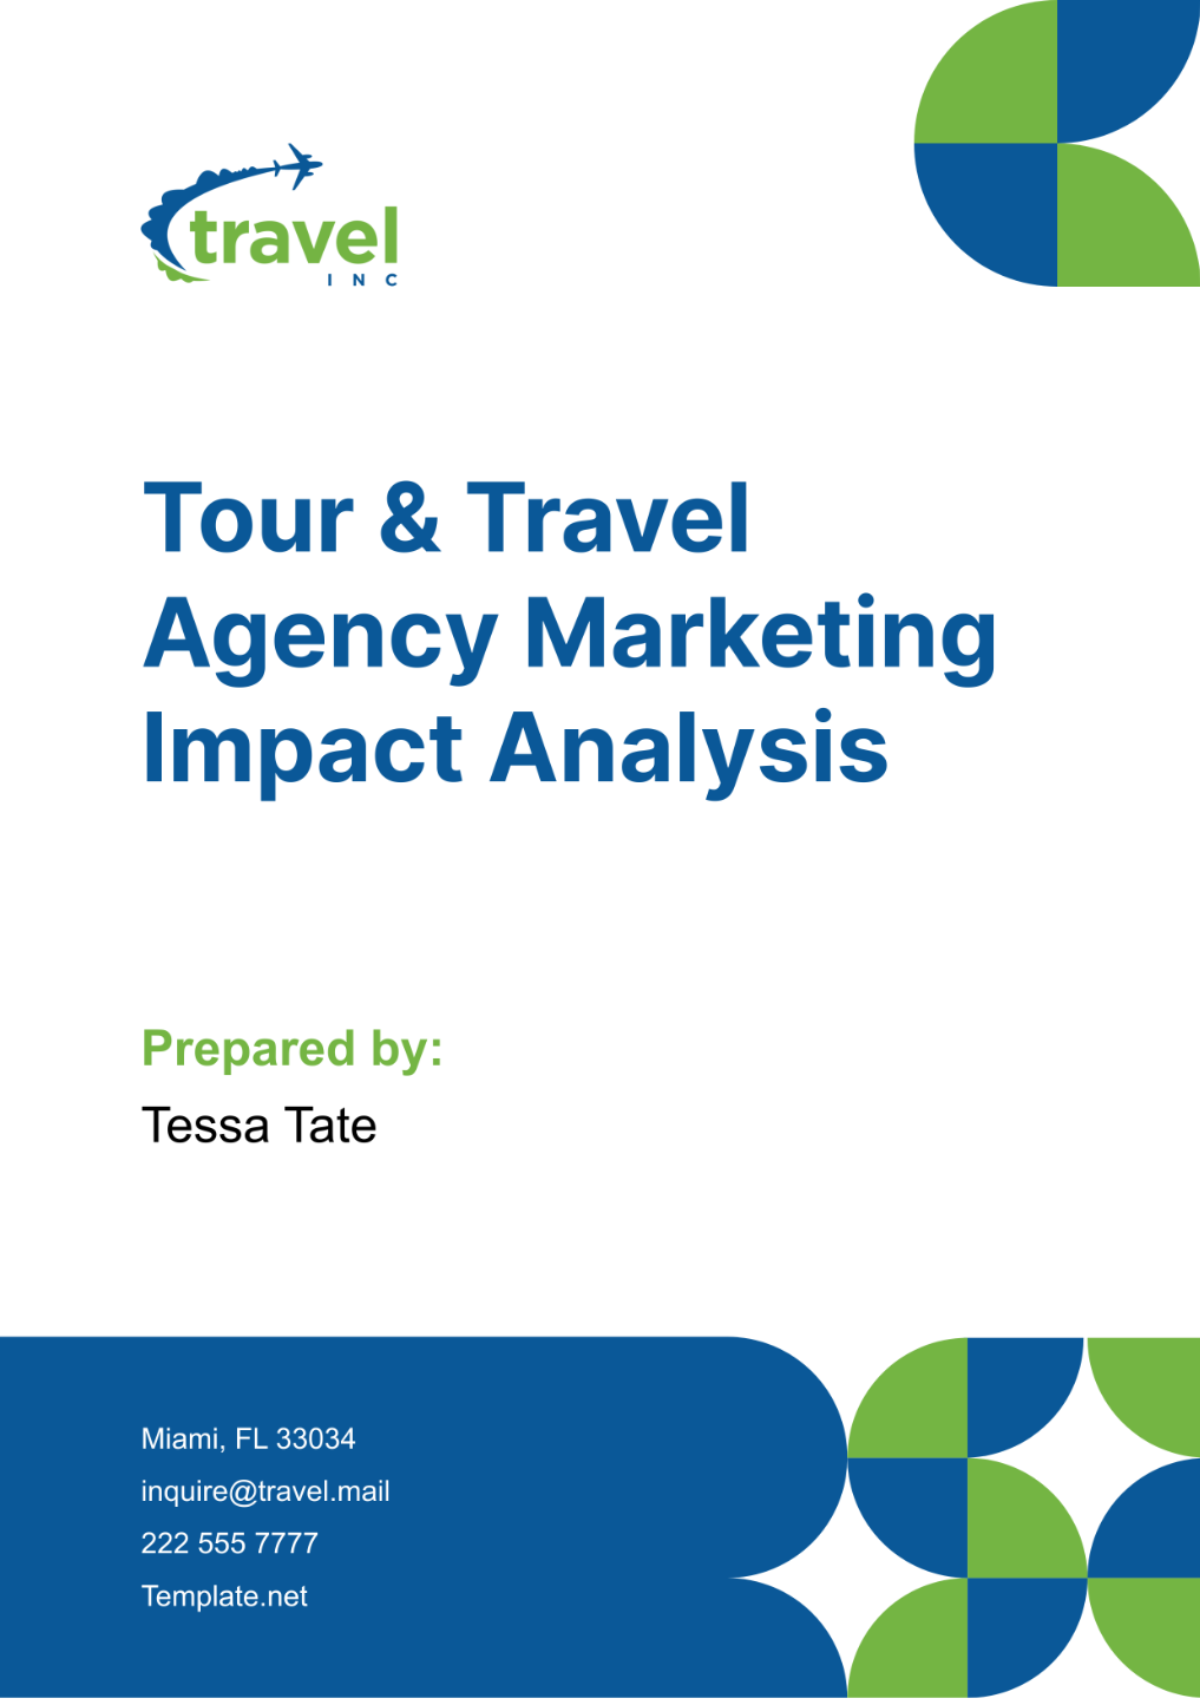 Tour & Travel Agency Marketing Impact Analysis Template